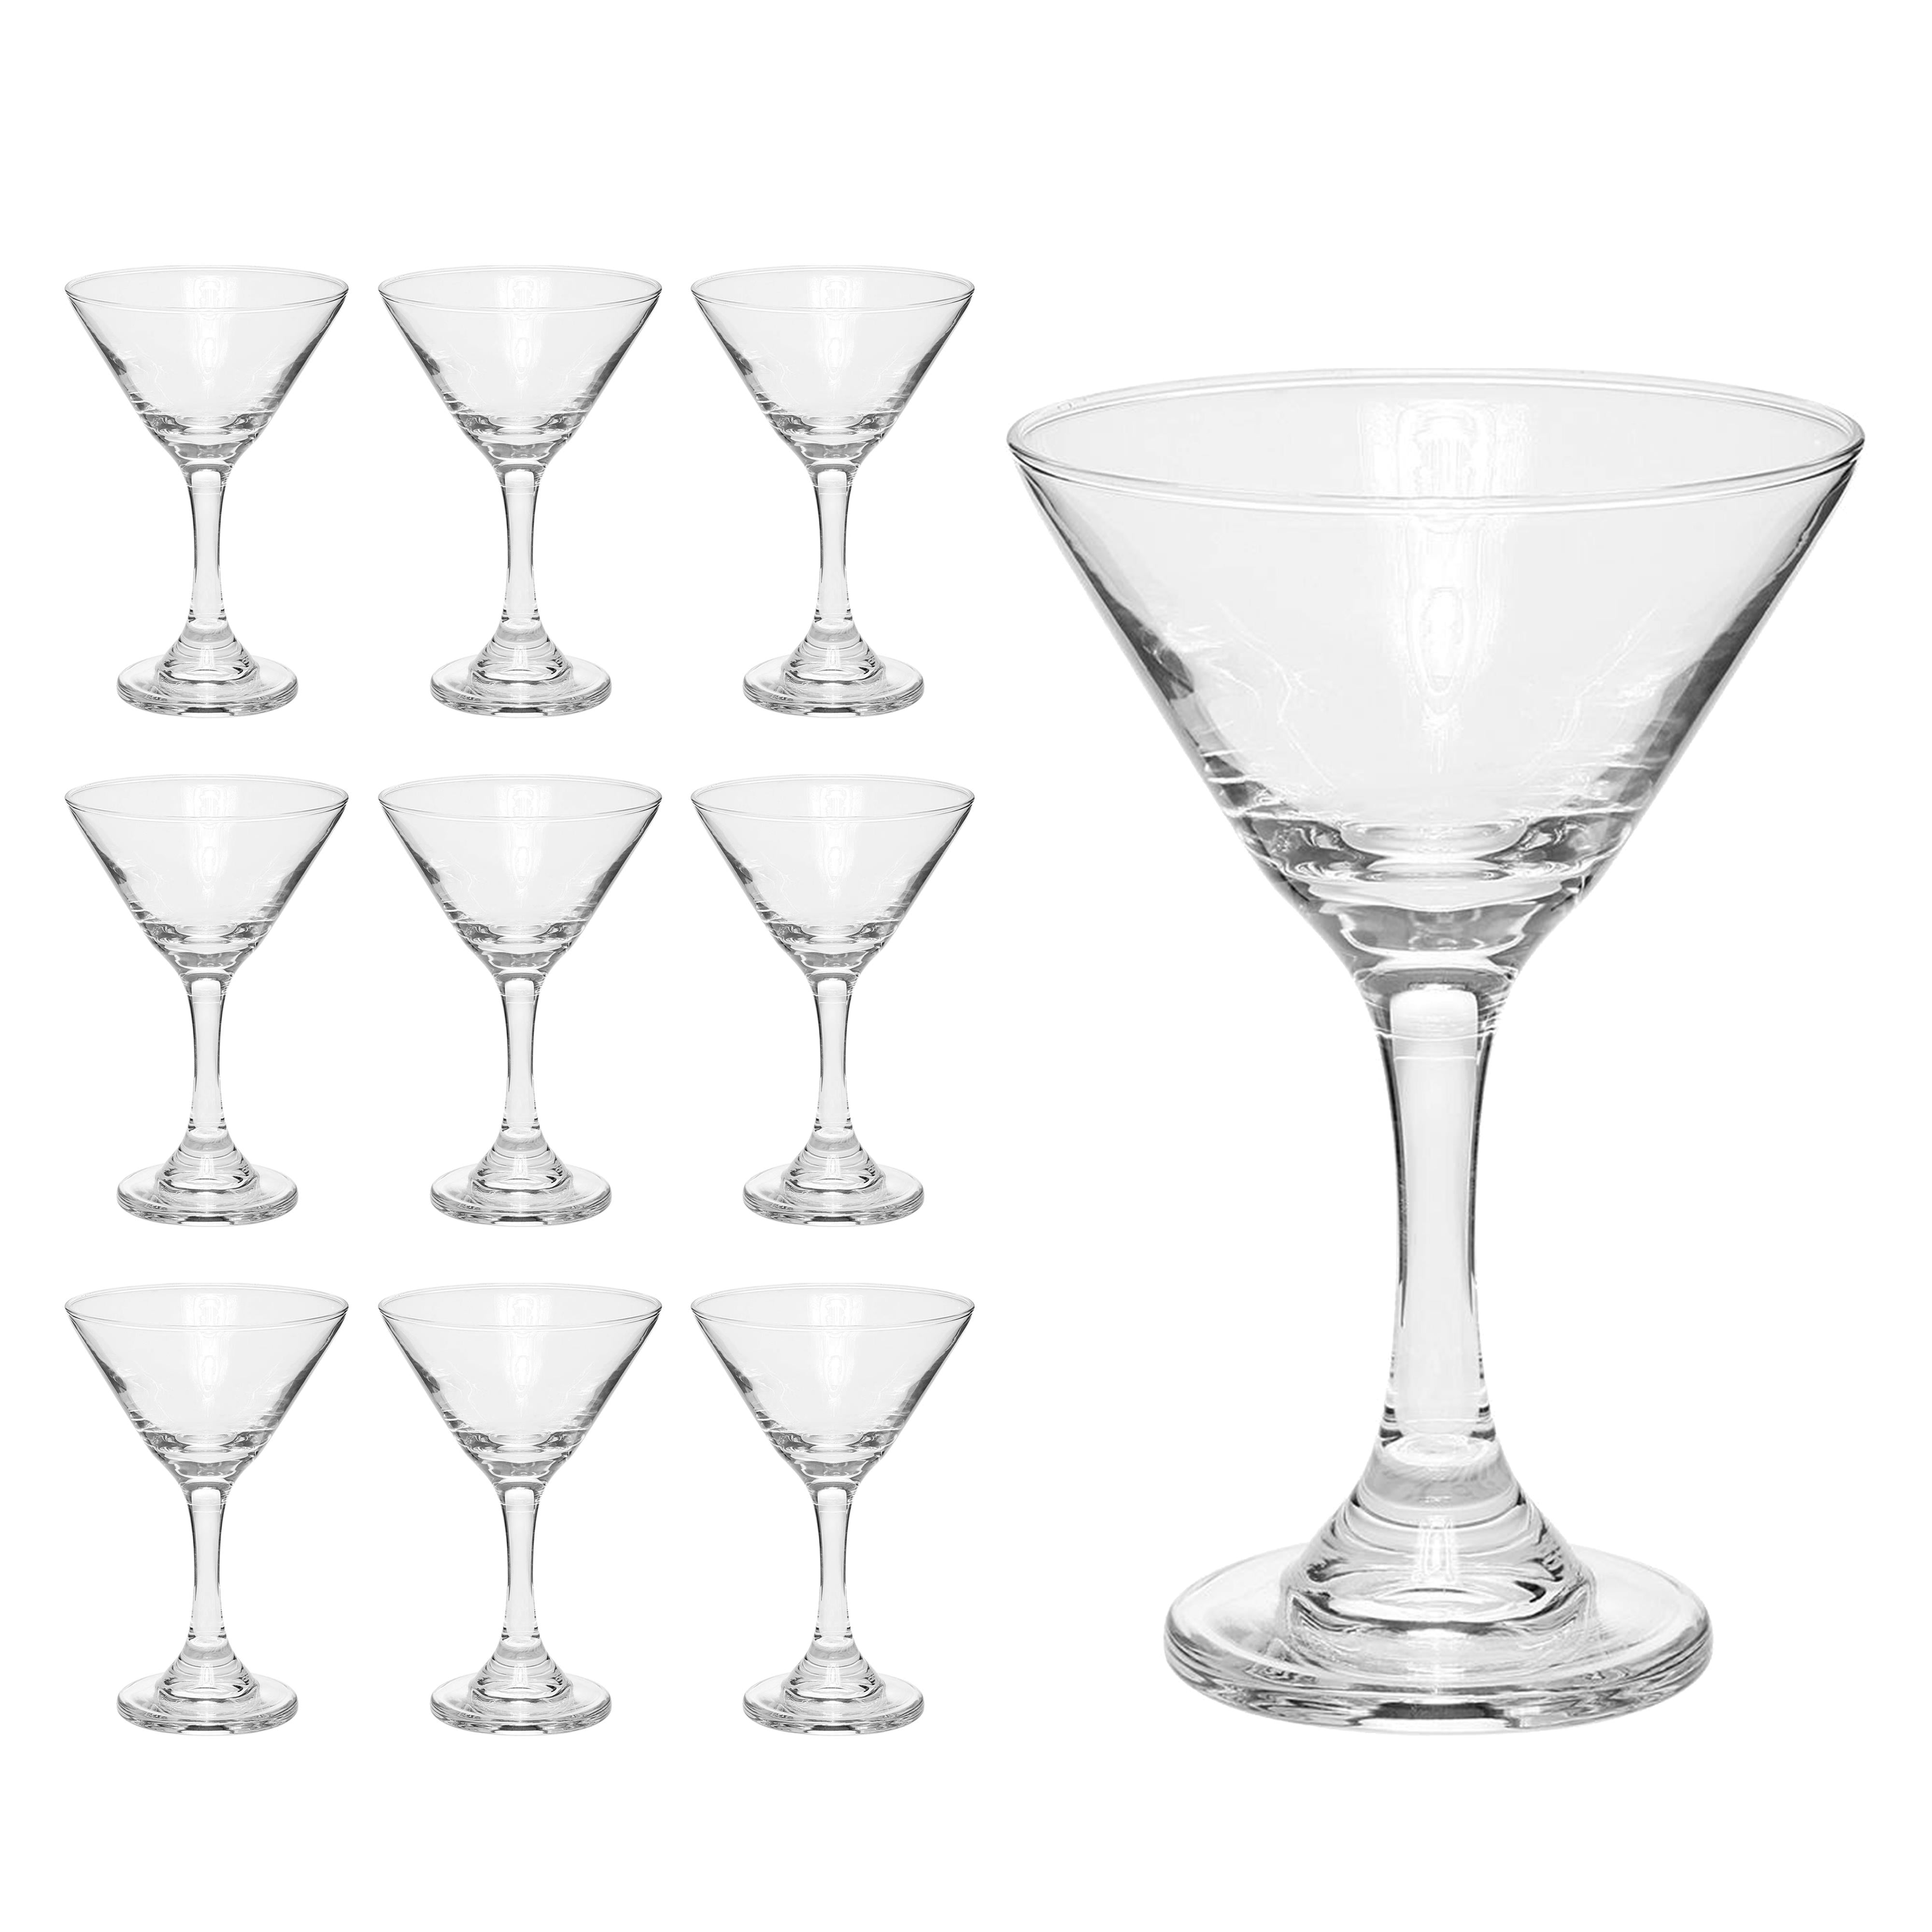  Personalized Martini Glass Set of 2, 9.25 oz